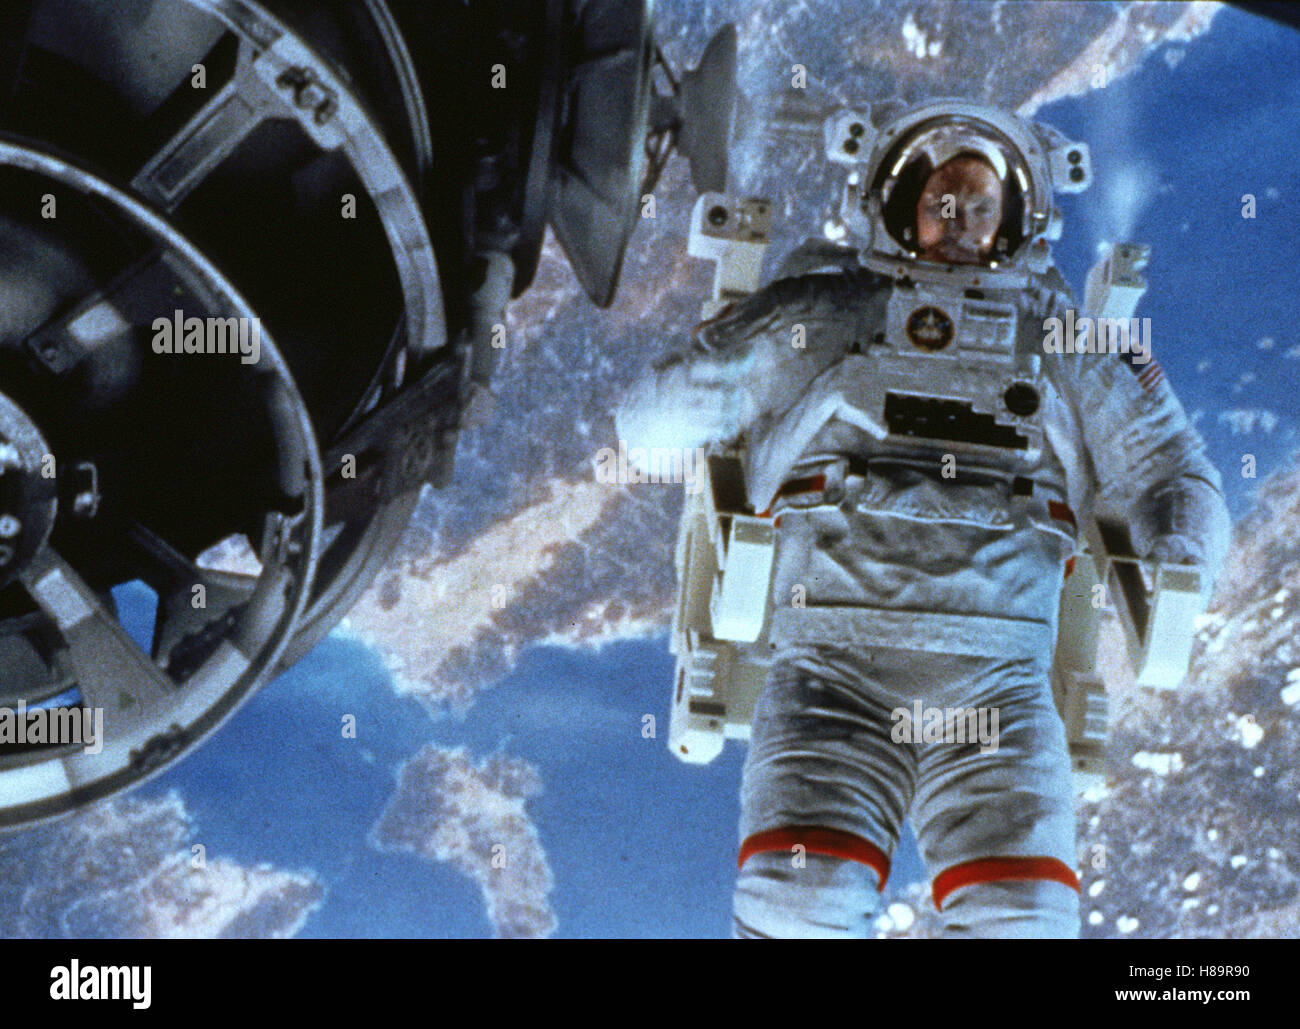 Space Cowboy, (Space Cowboy) USA 2000, Regie: Clint Eastwood, Stichwort: astronauta, Raumanzug, Timone, Weltraum, Erde, Raumkapsel Foto Stock